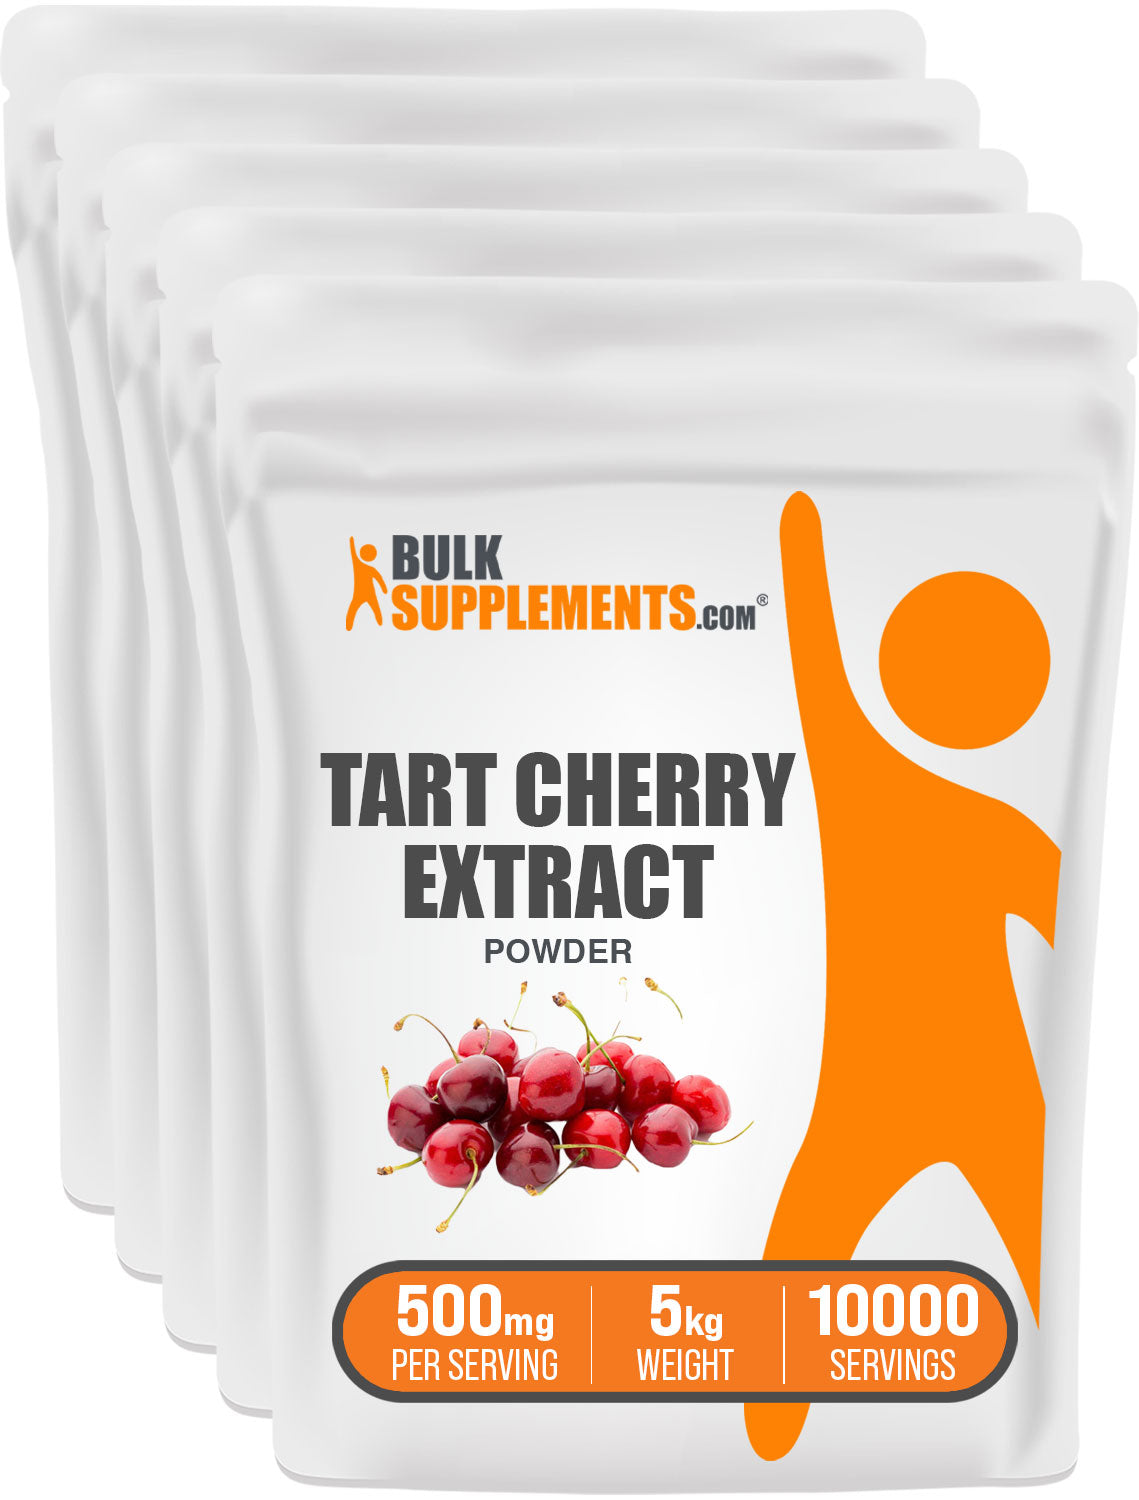 Tart Cherry Extract Powder 5kg Bag